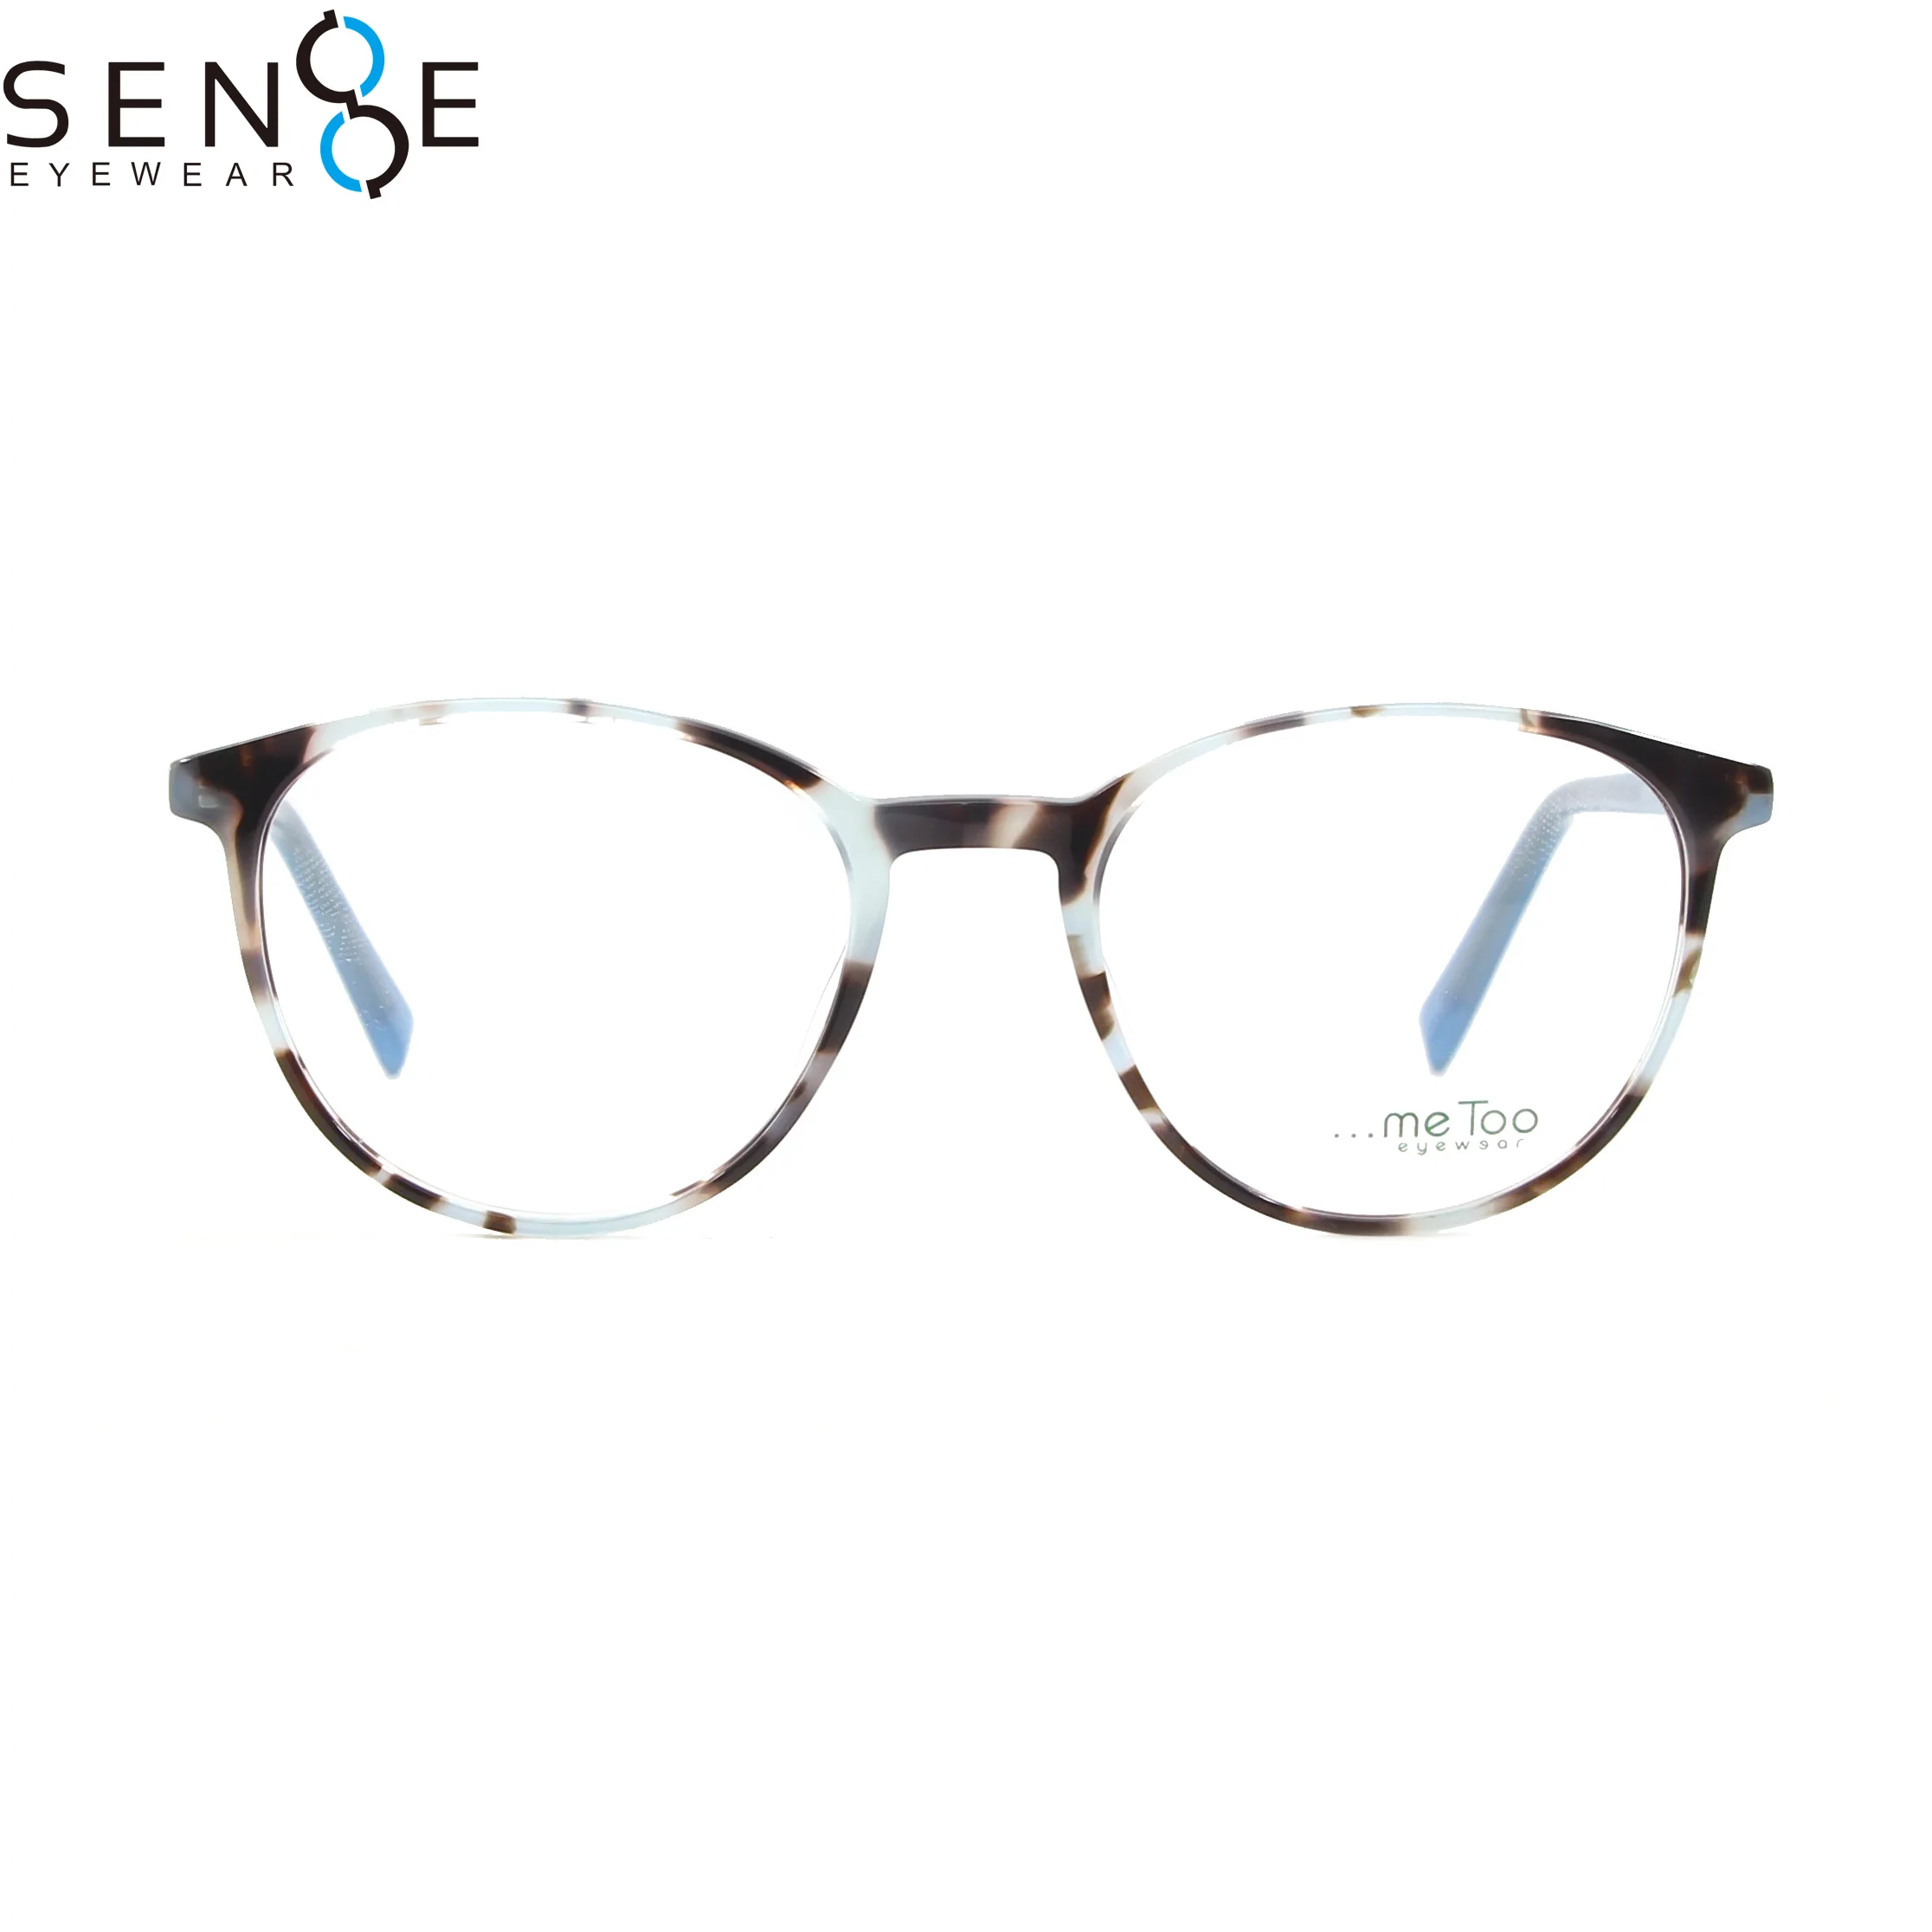 

96110 Metoo glasses high selling acetate frame optical glasses